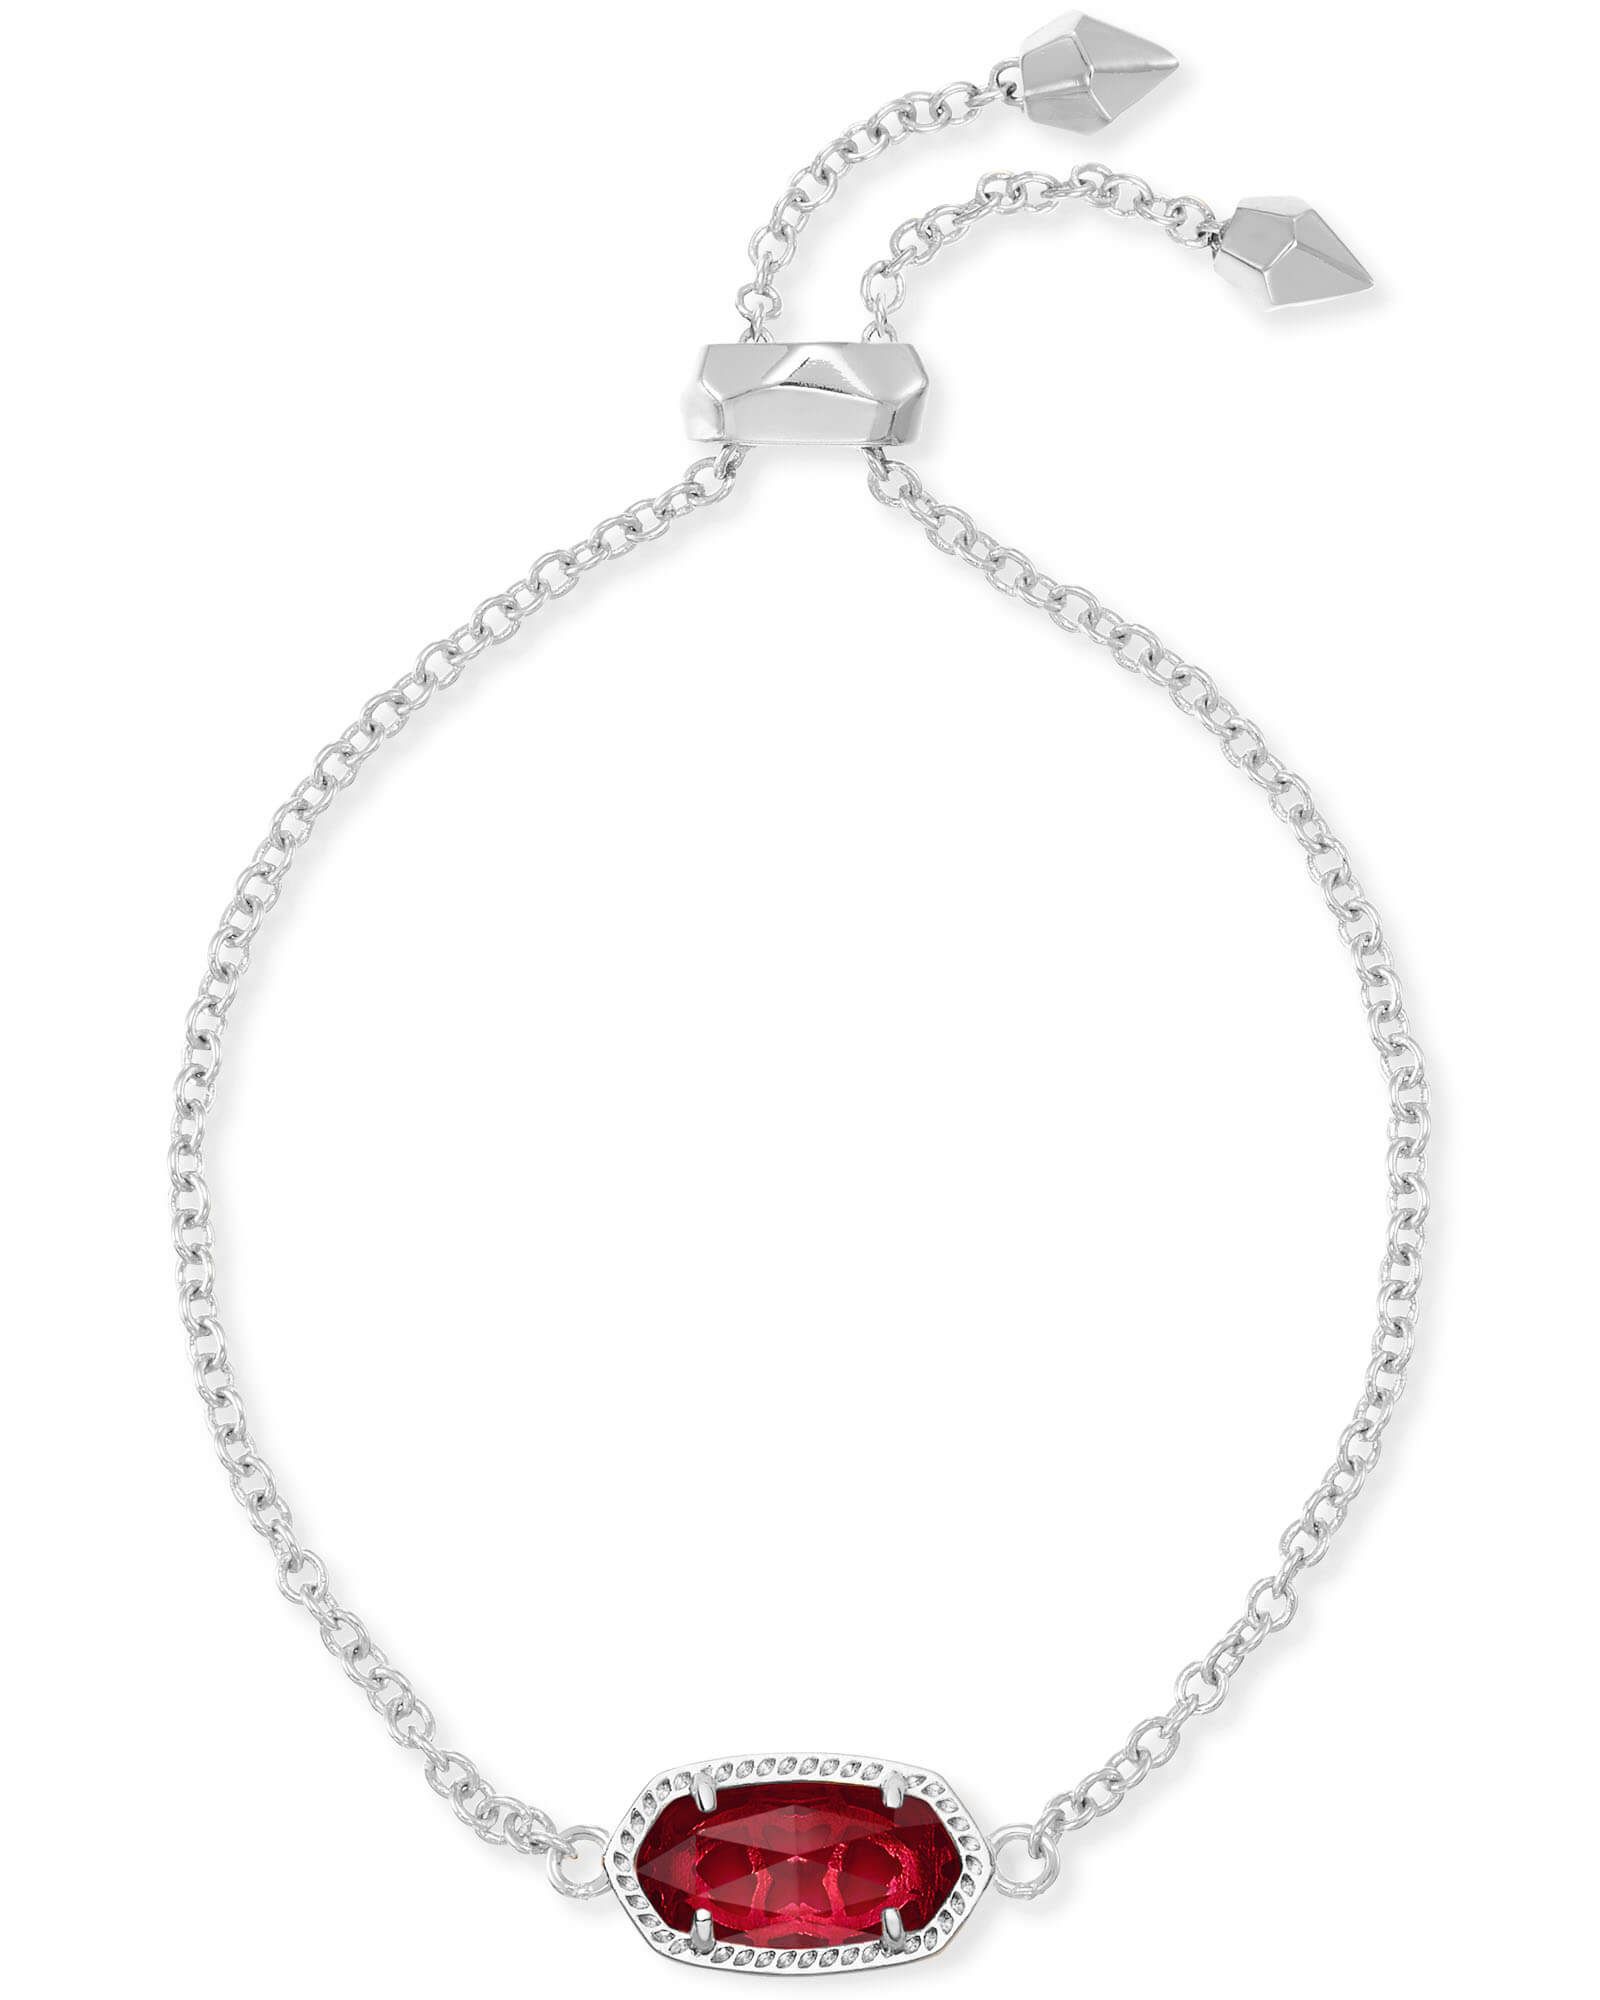 Elaina Silver Adjustable Chain Bracelet in Berry | Kendra Scott